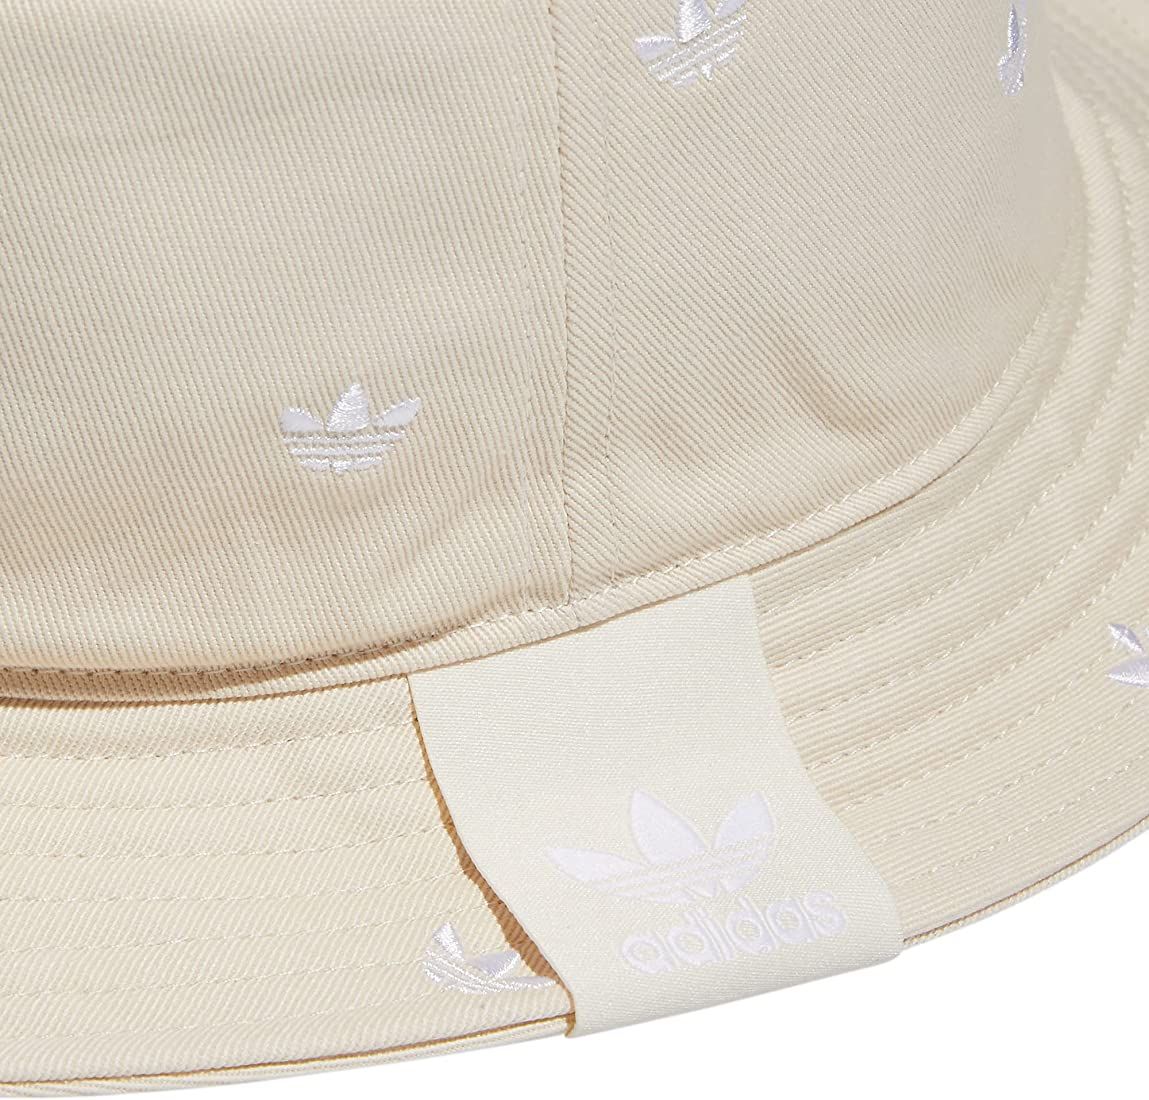 adidas Originals Washed Bucket Hat | Amazon (US)